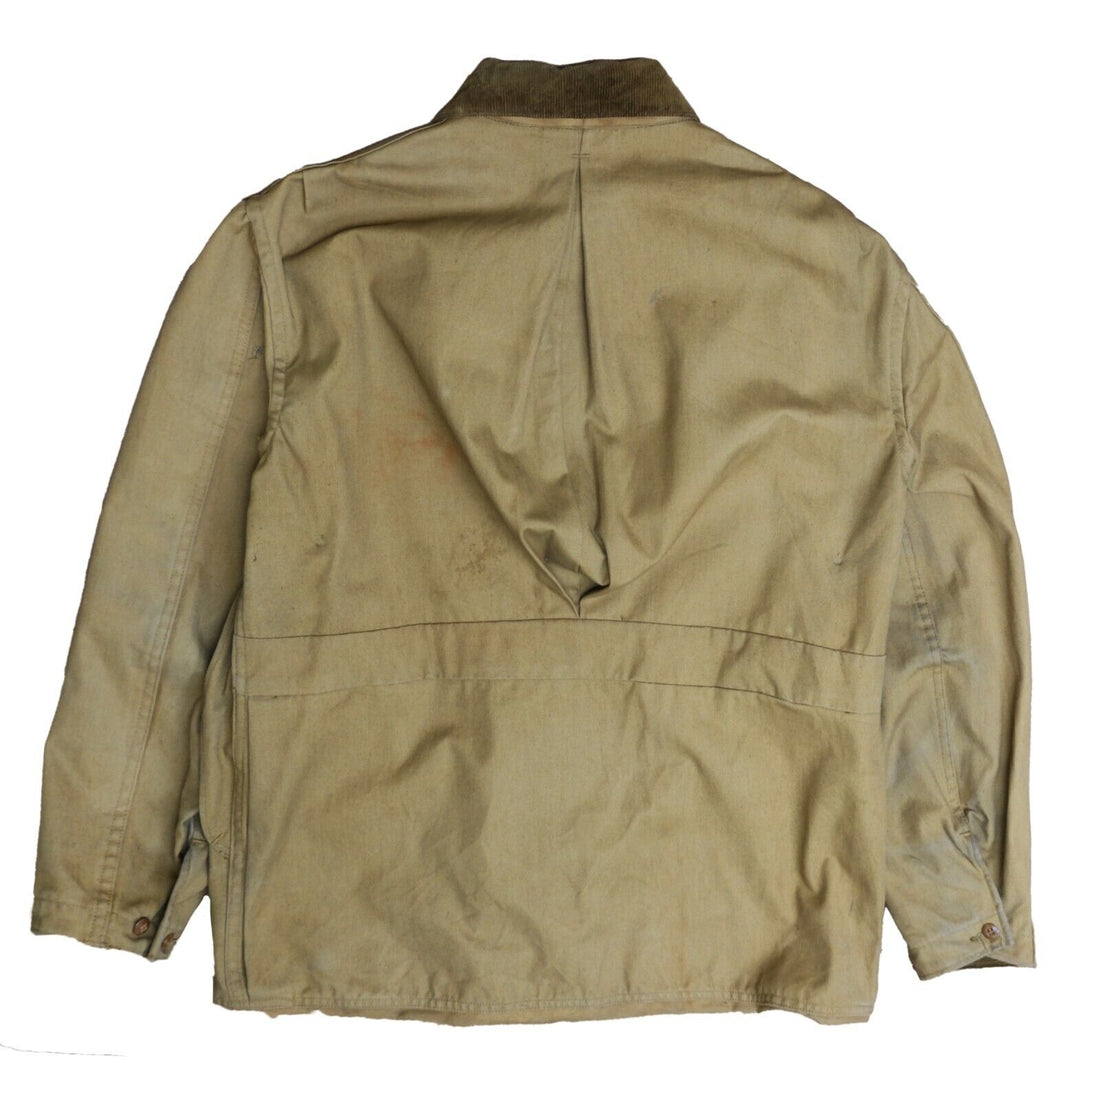 Vintage JC Higgins Hunting Jacket Size 40 Beige Roebuck